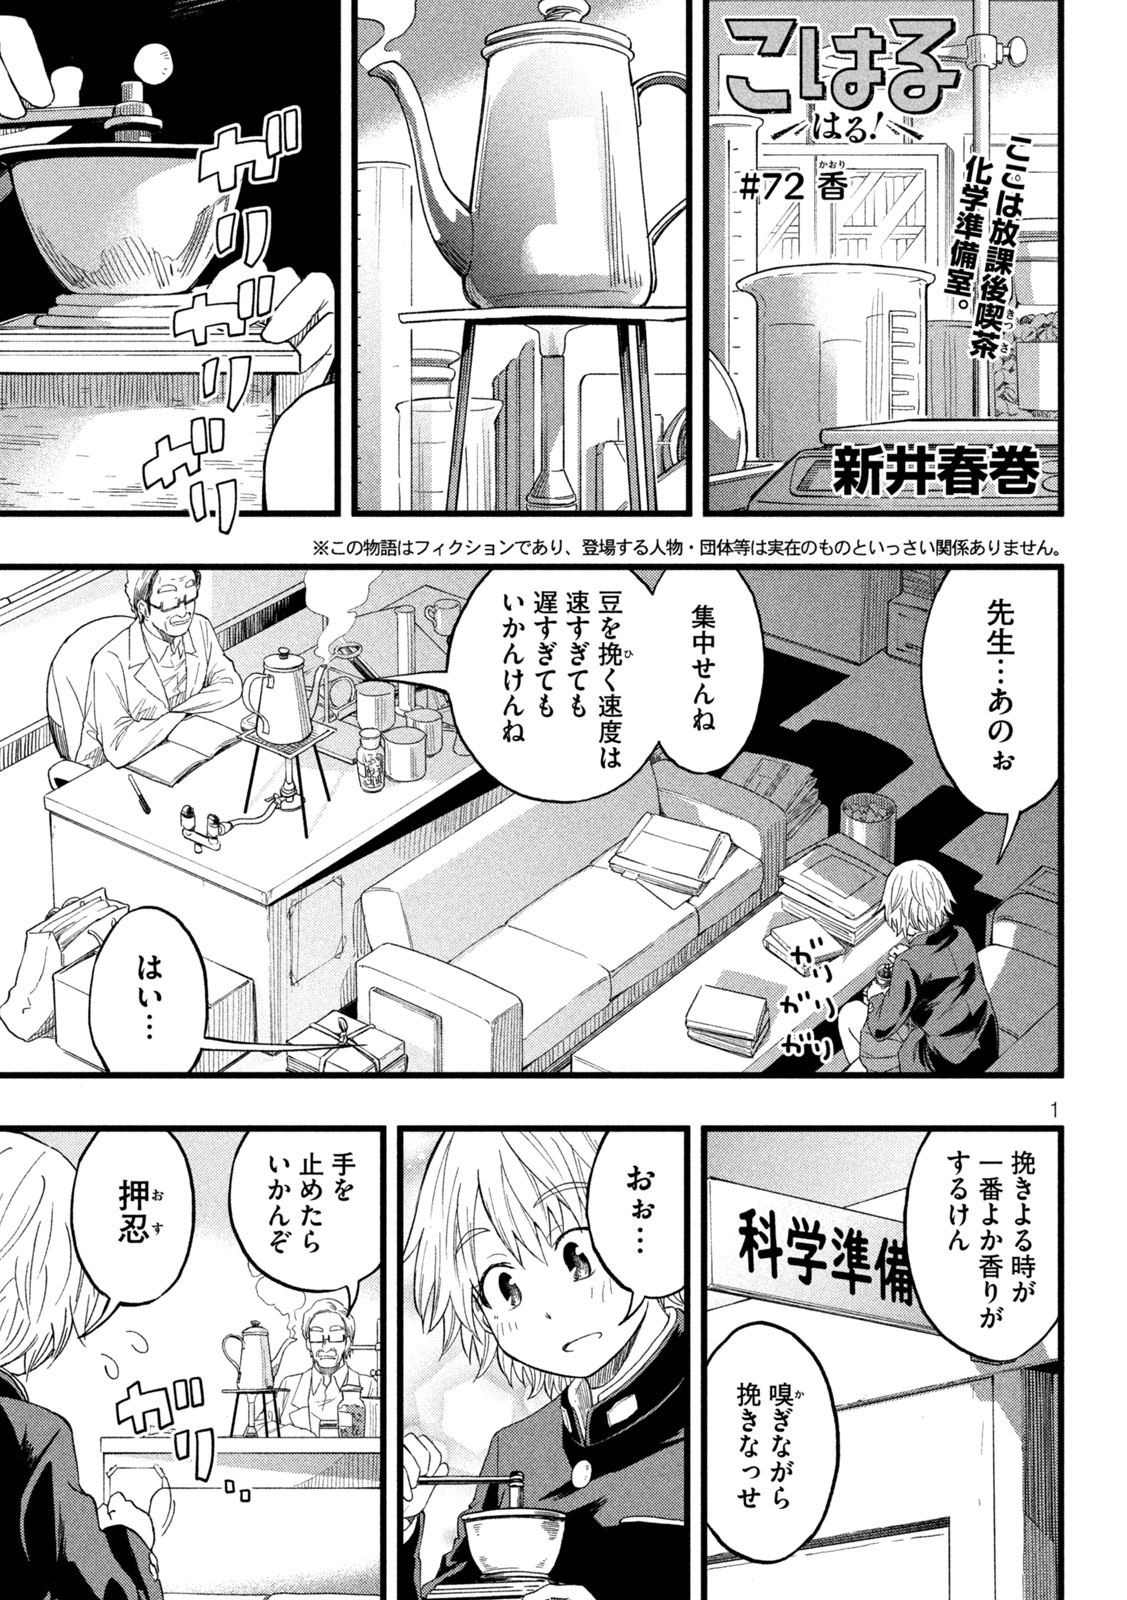 Koharu haru! - Chapter 72 - Page 1